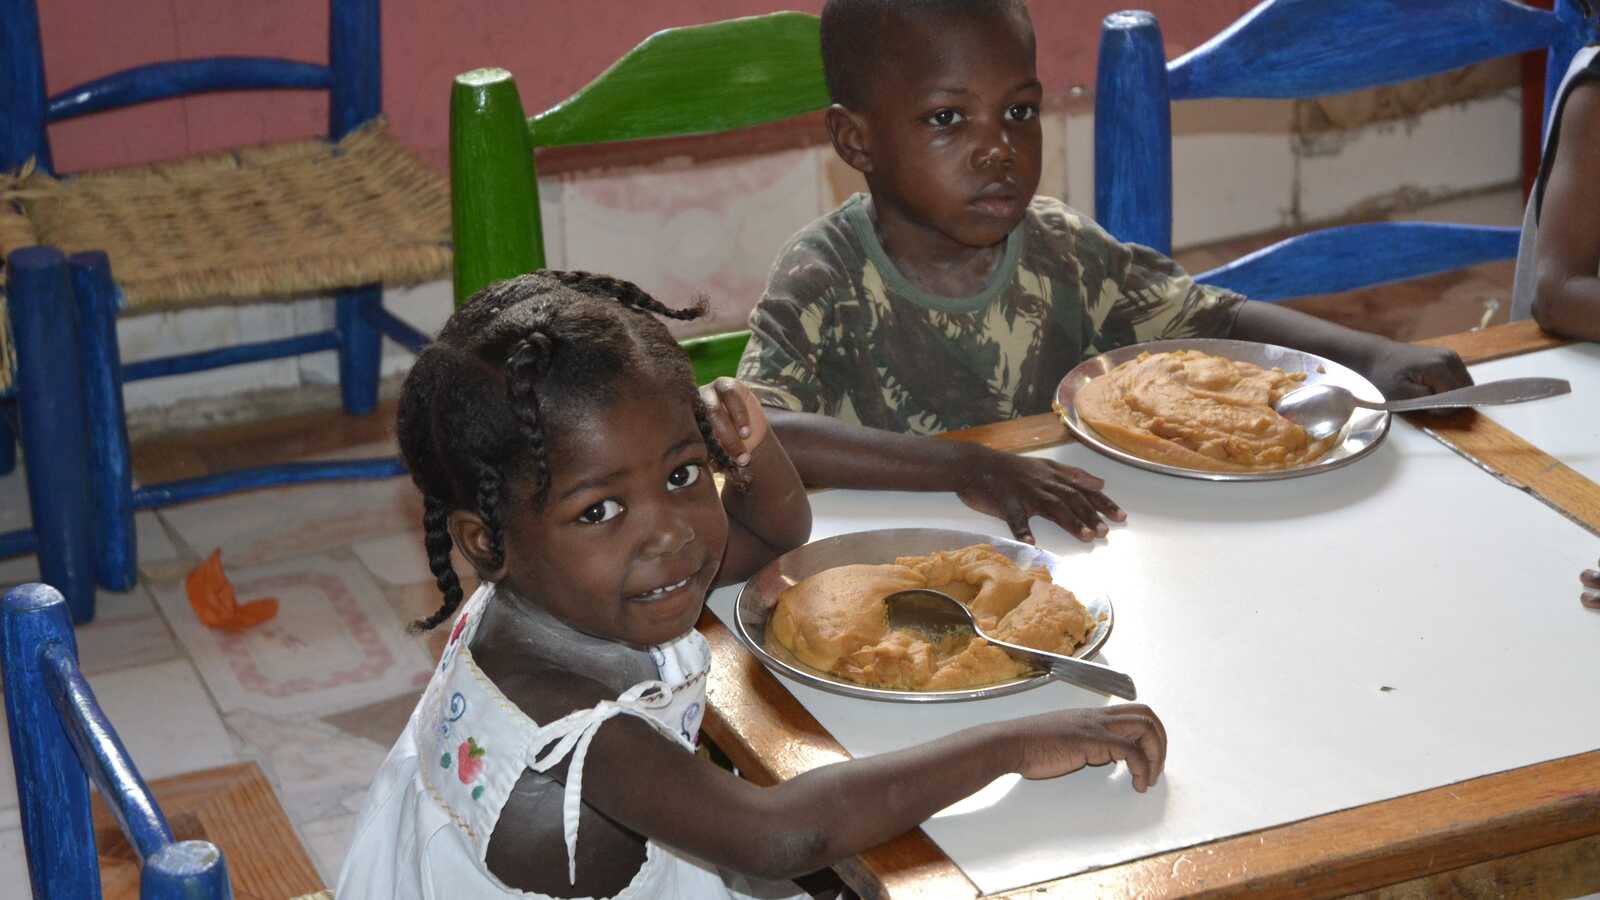 children in Haiti receiving a meal through Holt sponsorship program